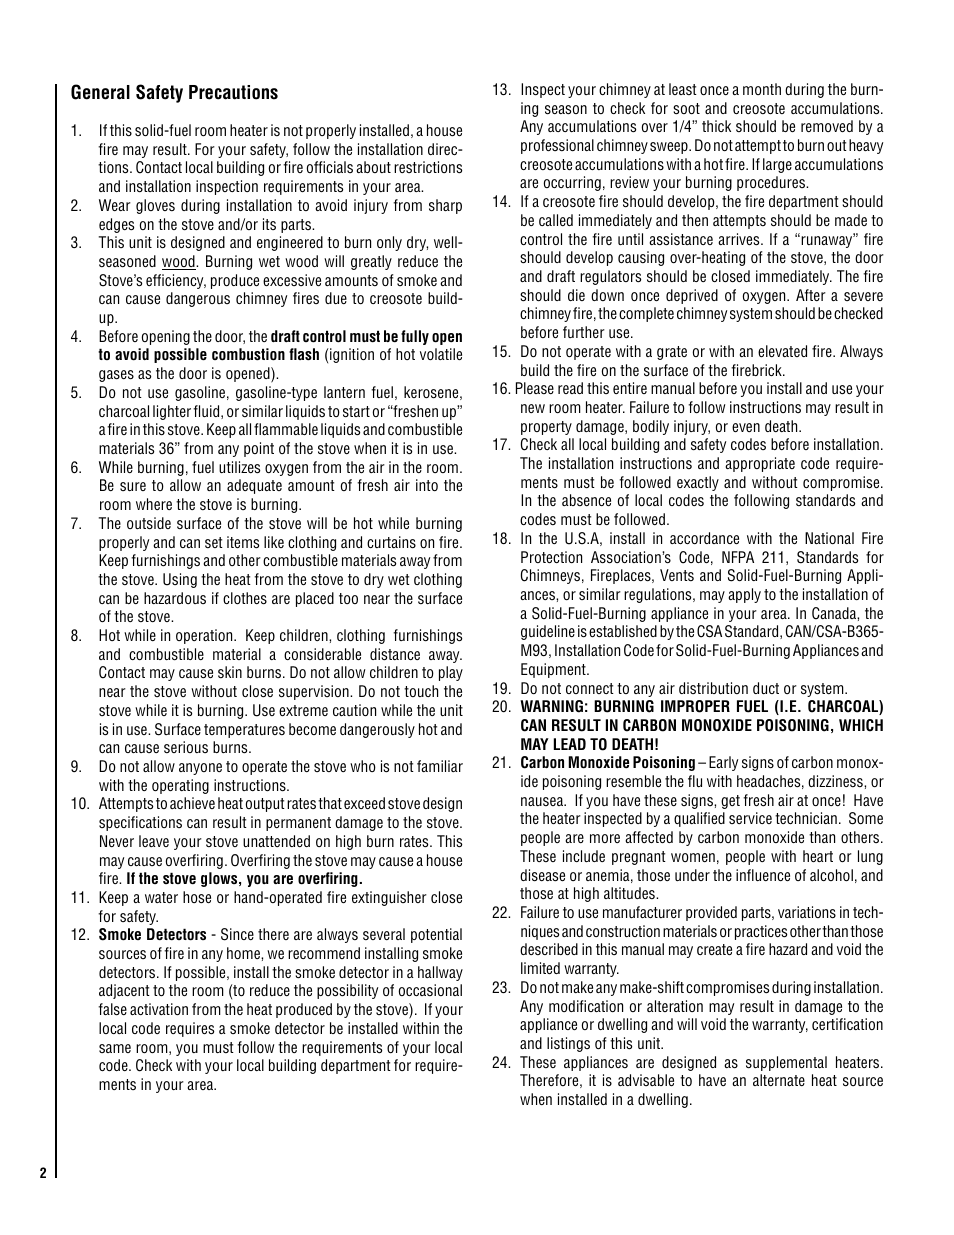 LG MODEL STRIKER S160 User Manual | Page 2 / 22